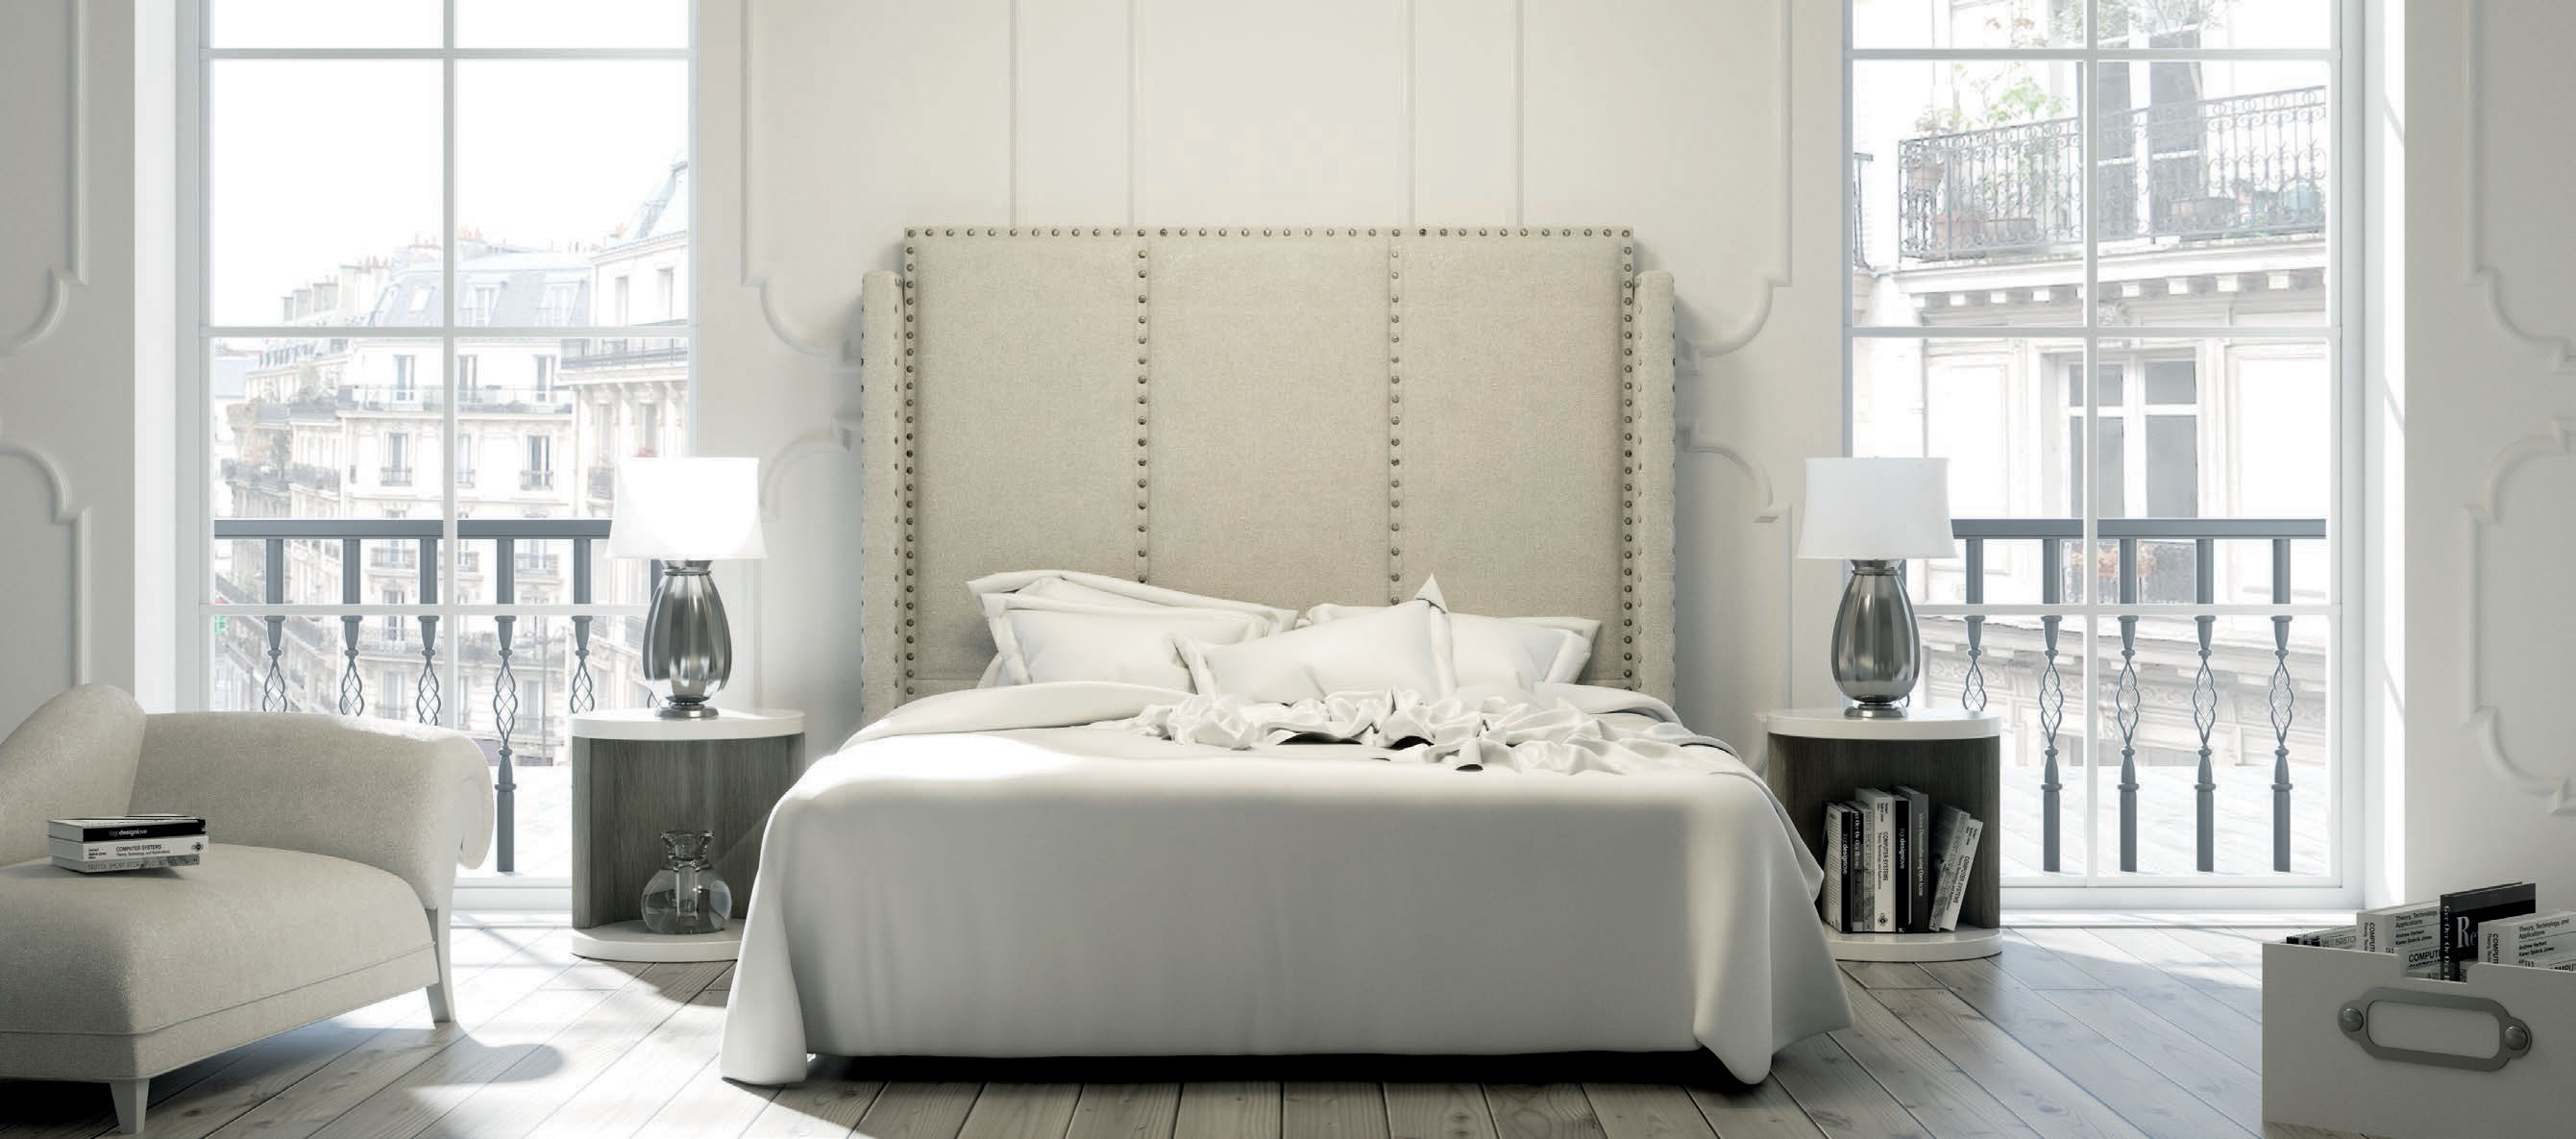 Brands Franco Furniture Bedrooms vol1, Spain DOR 152